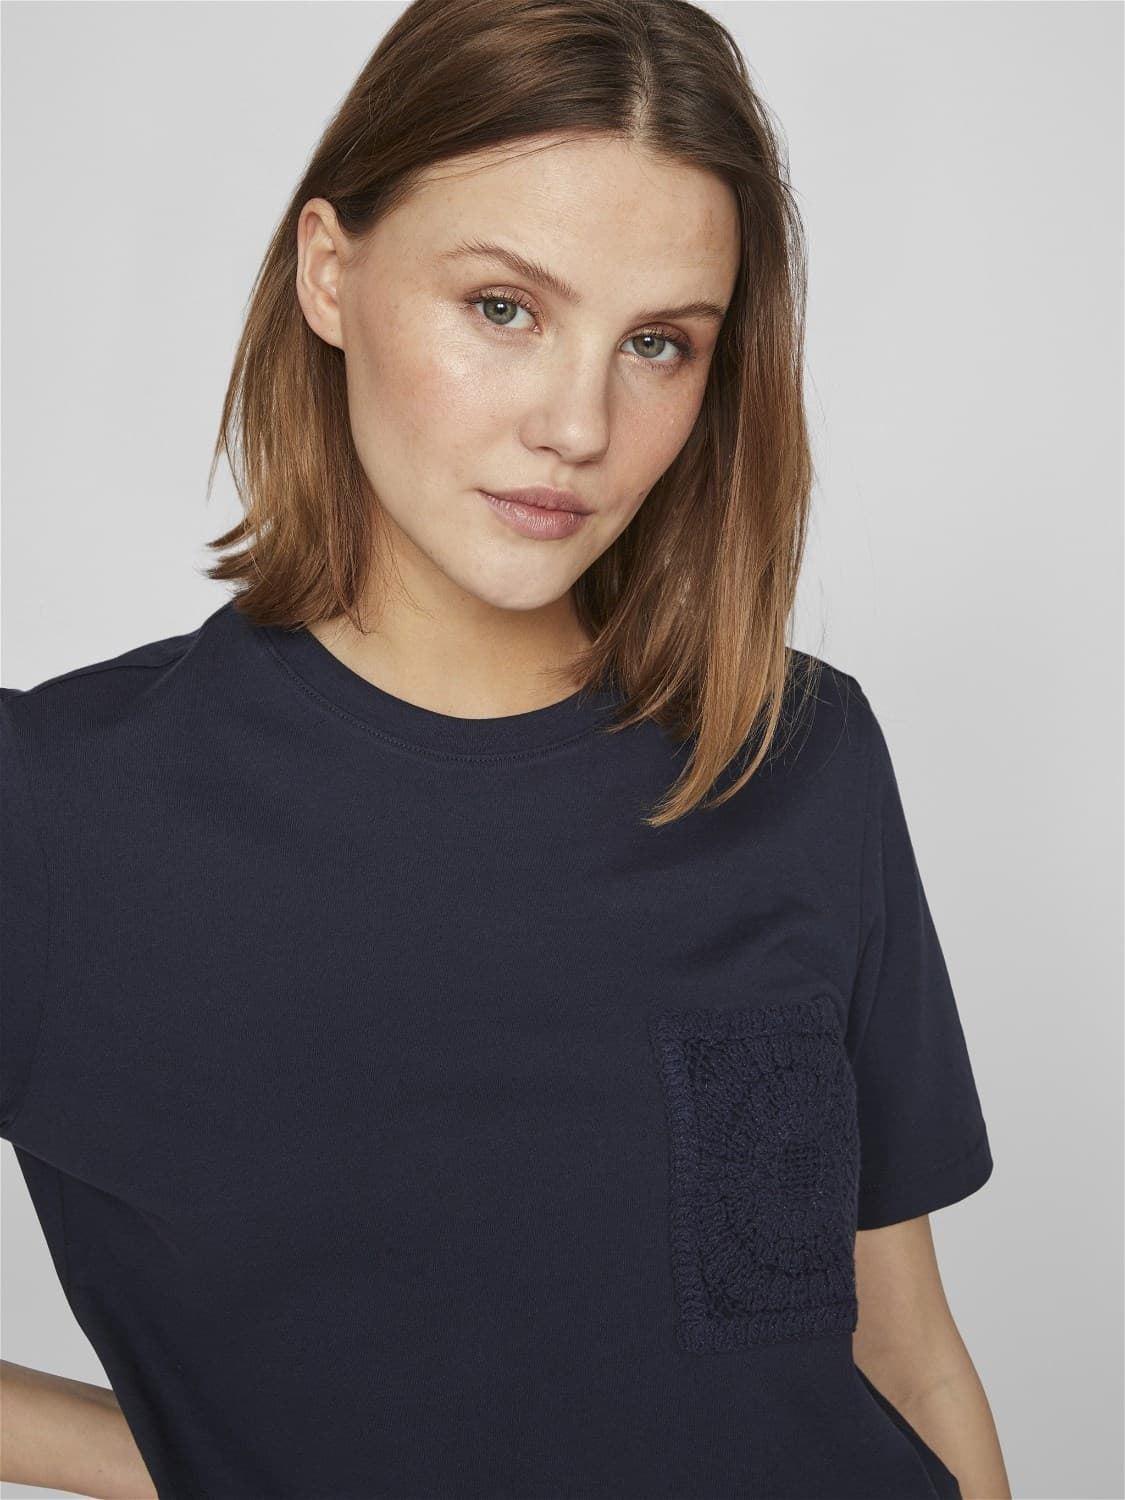 Camiseta crochet visybil marino - Imagen 3